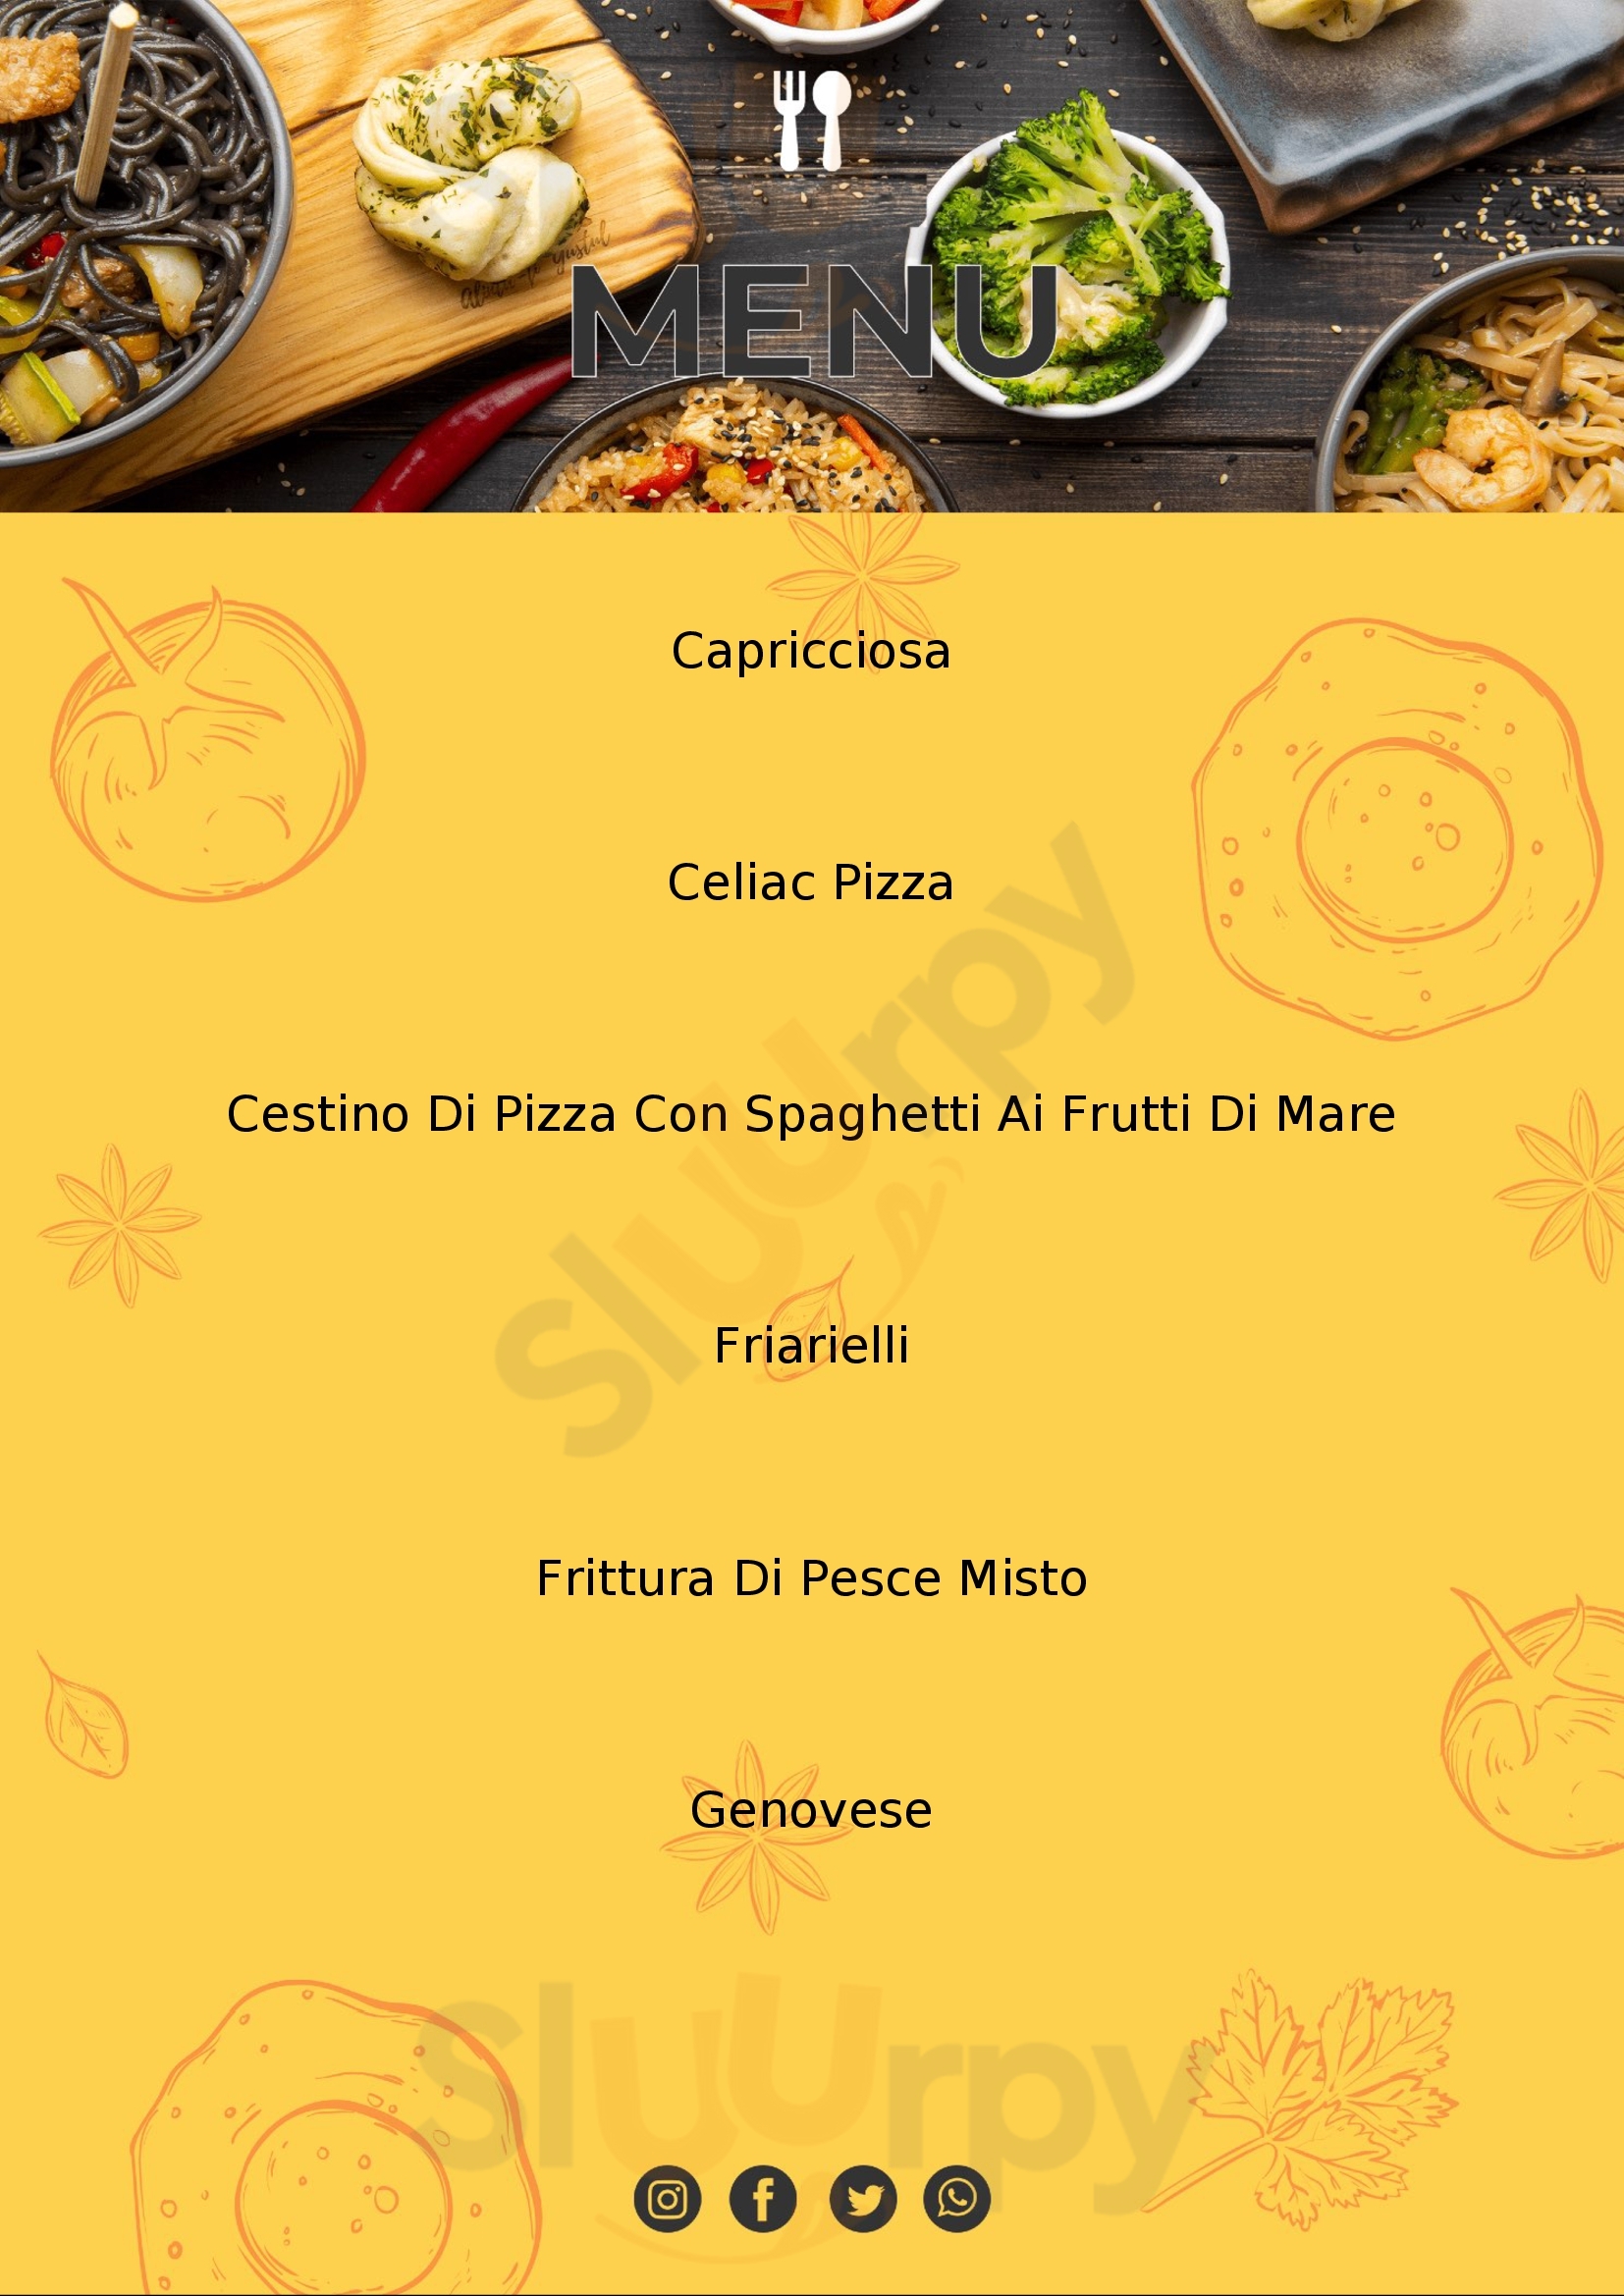 La Pizzettata Napoli menù 1 pagina